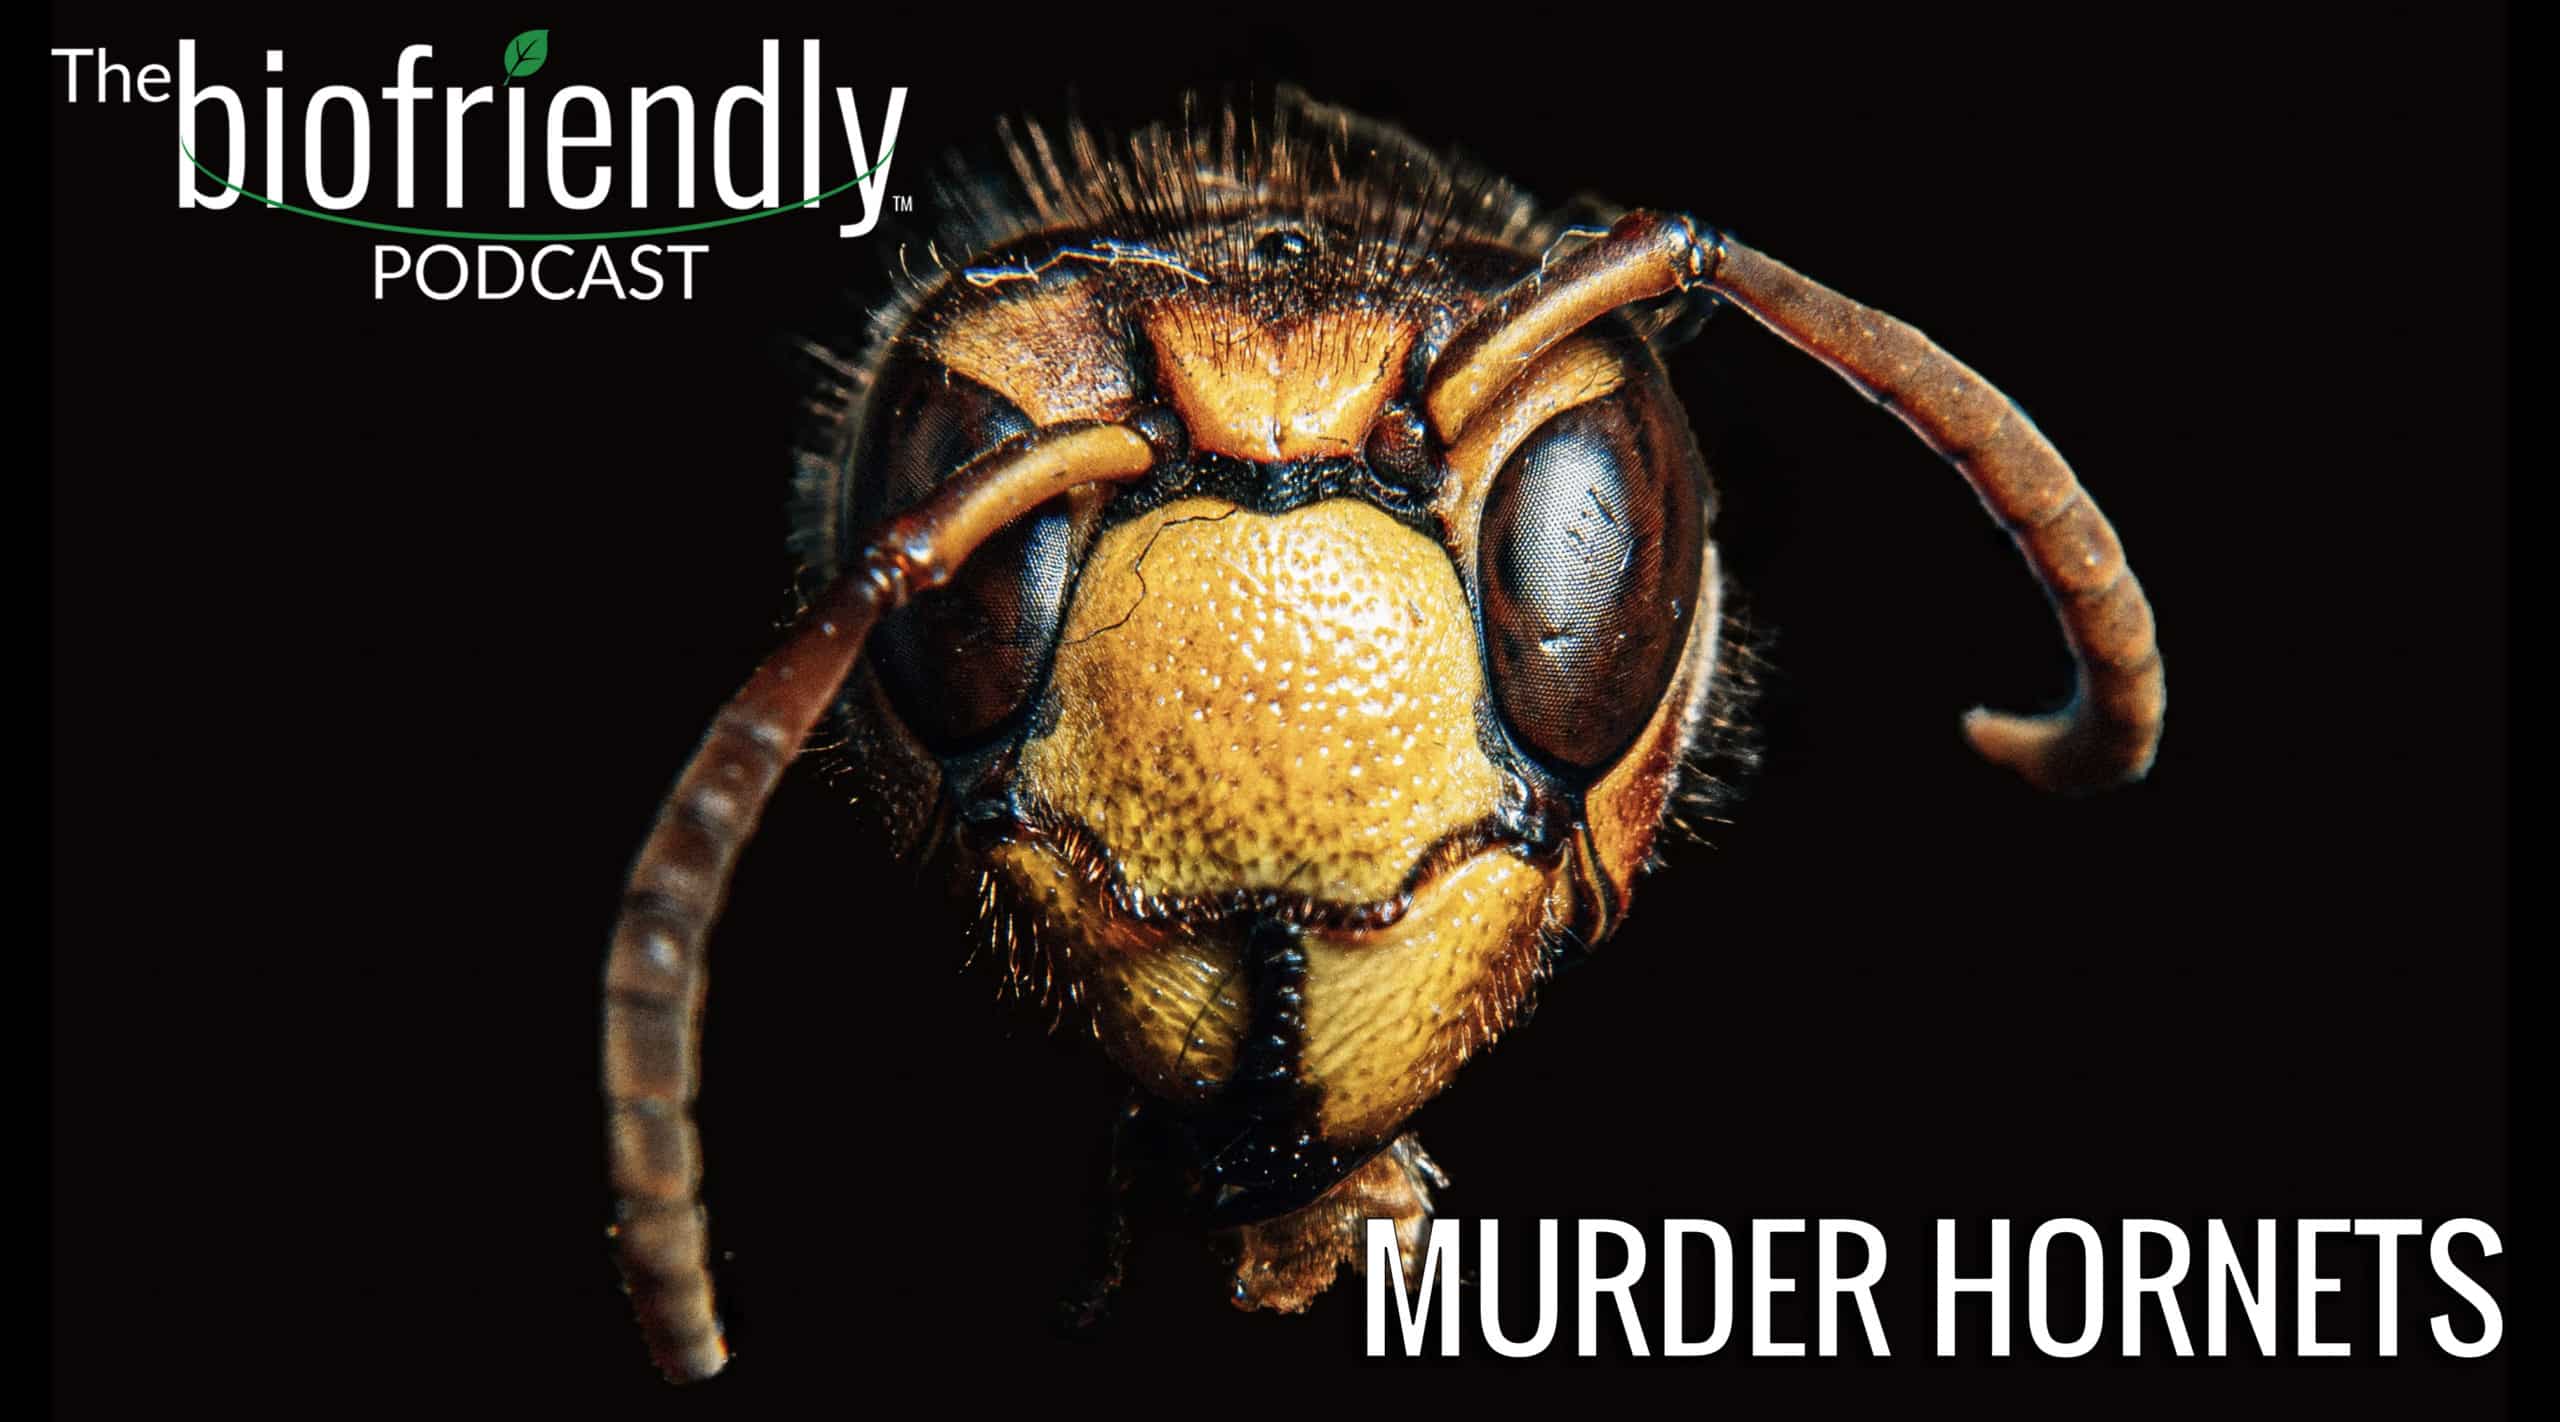 The Biofriendly Podcast - Episode 66 - Murder Hornets